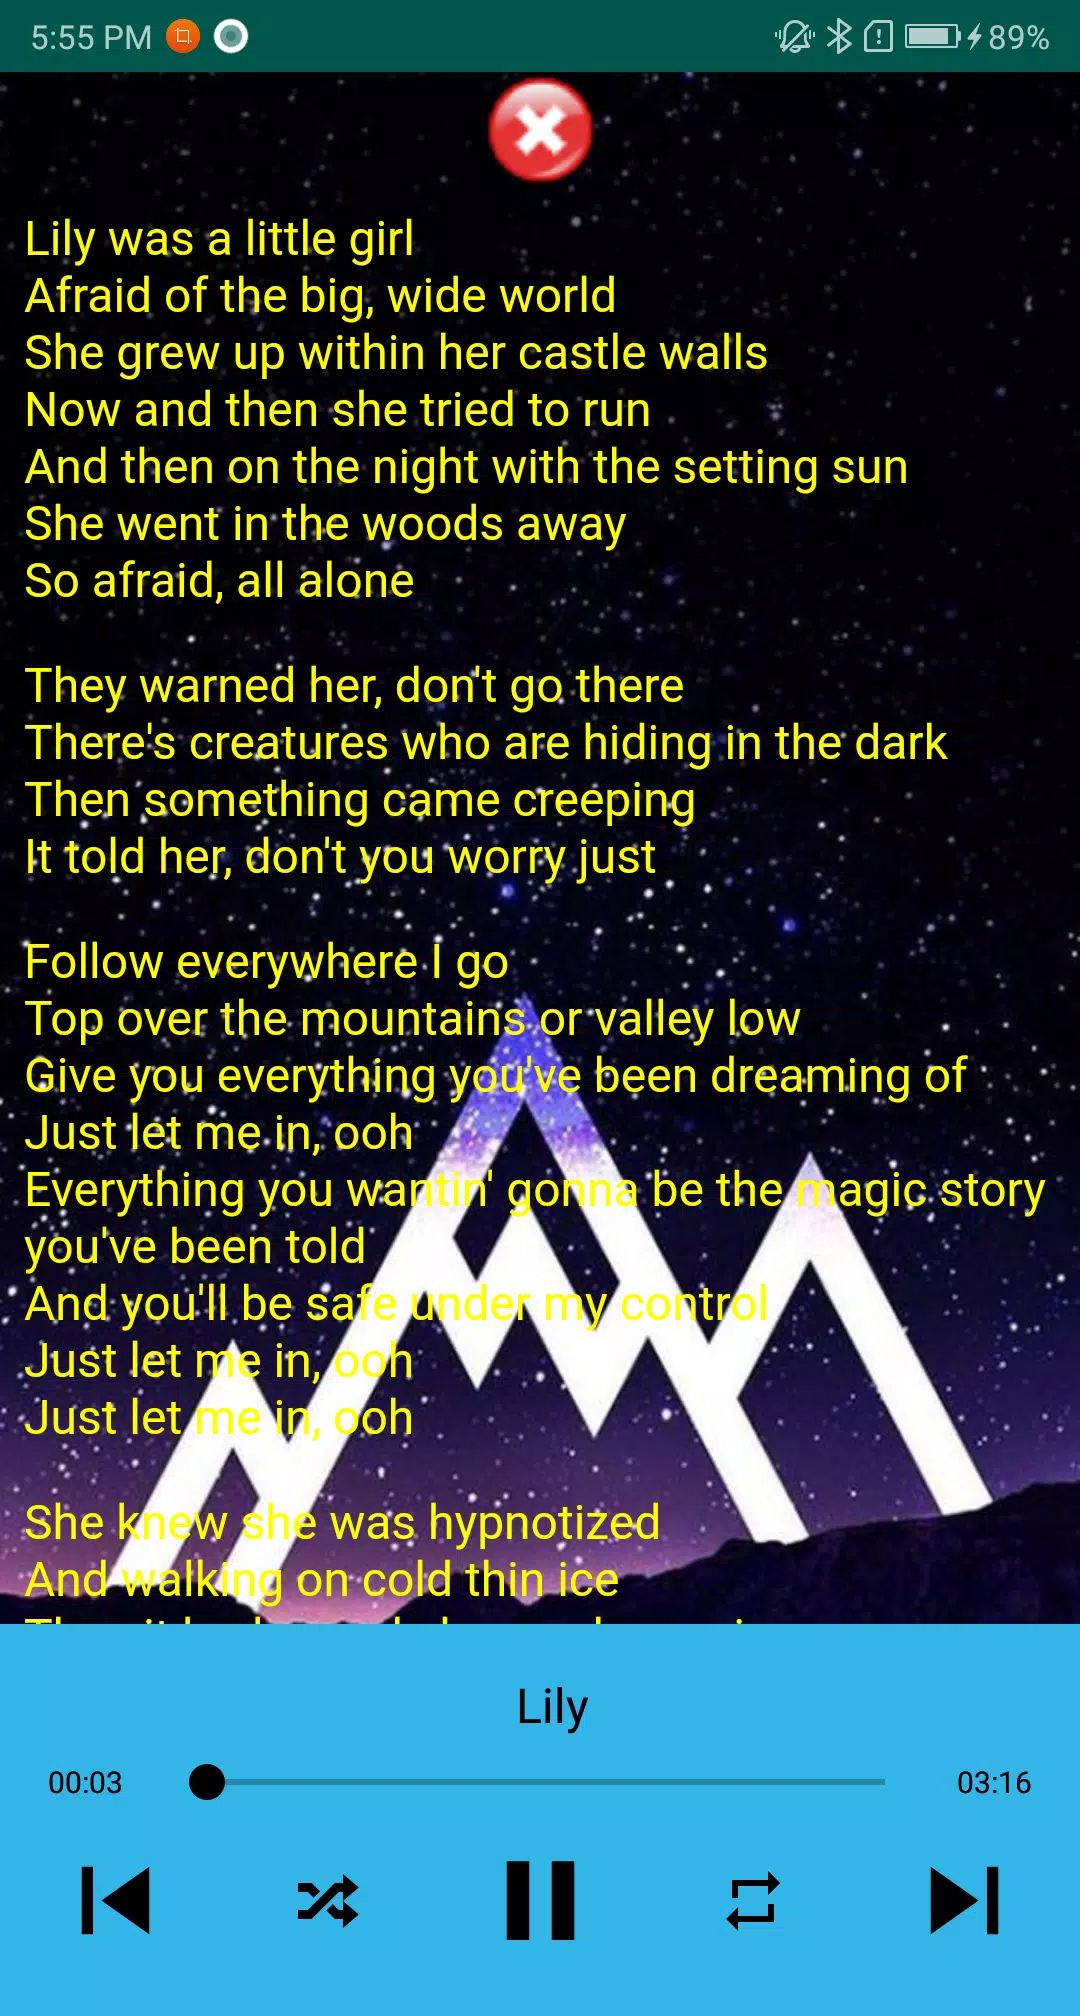 Alan Walker Alone lyrics  Alan walker, Alone lyrics, Me too lyrics